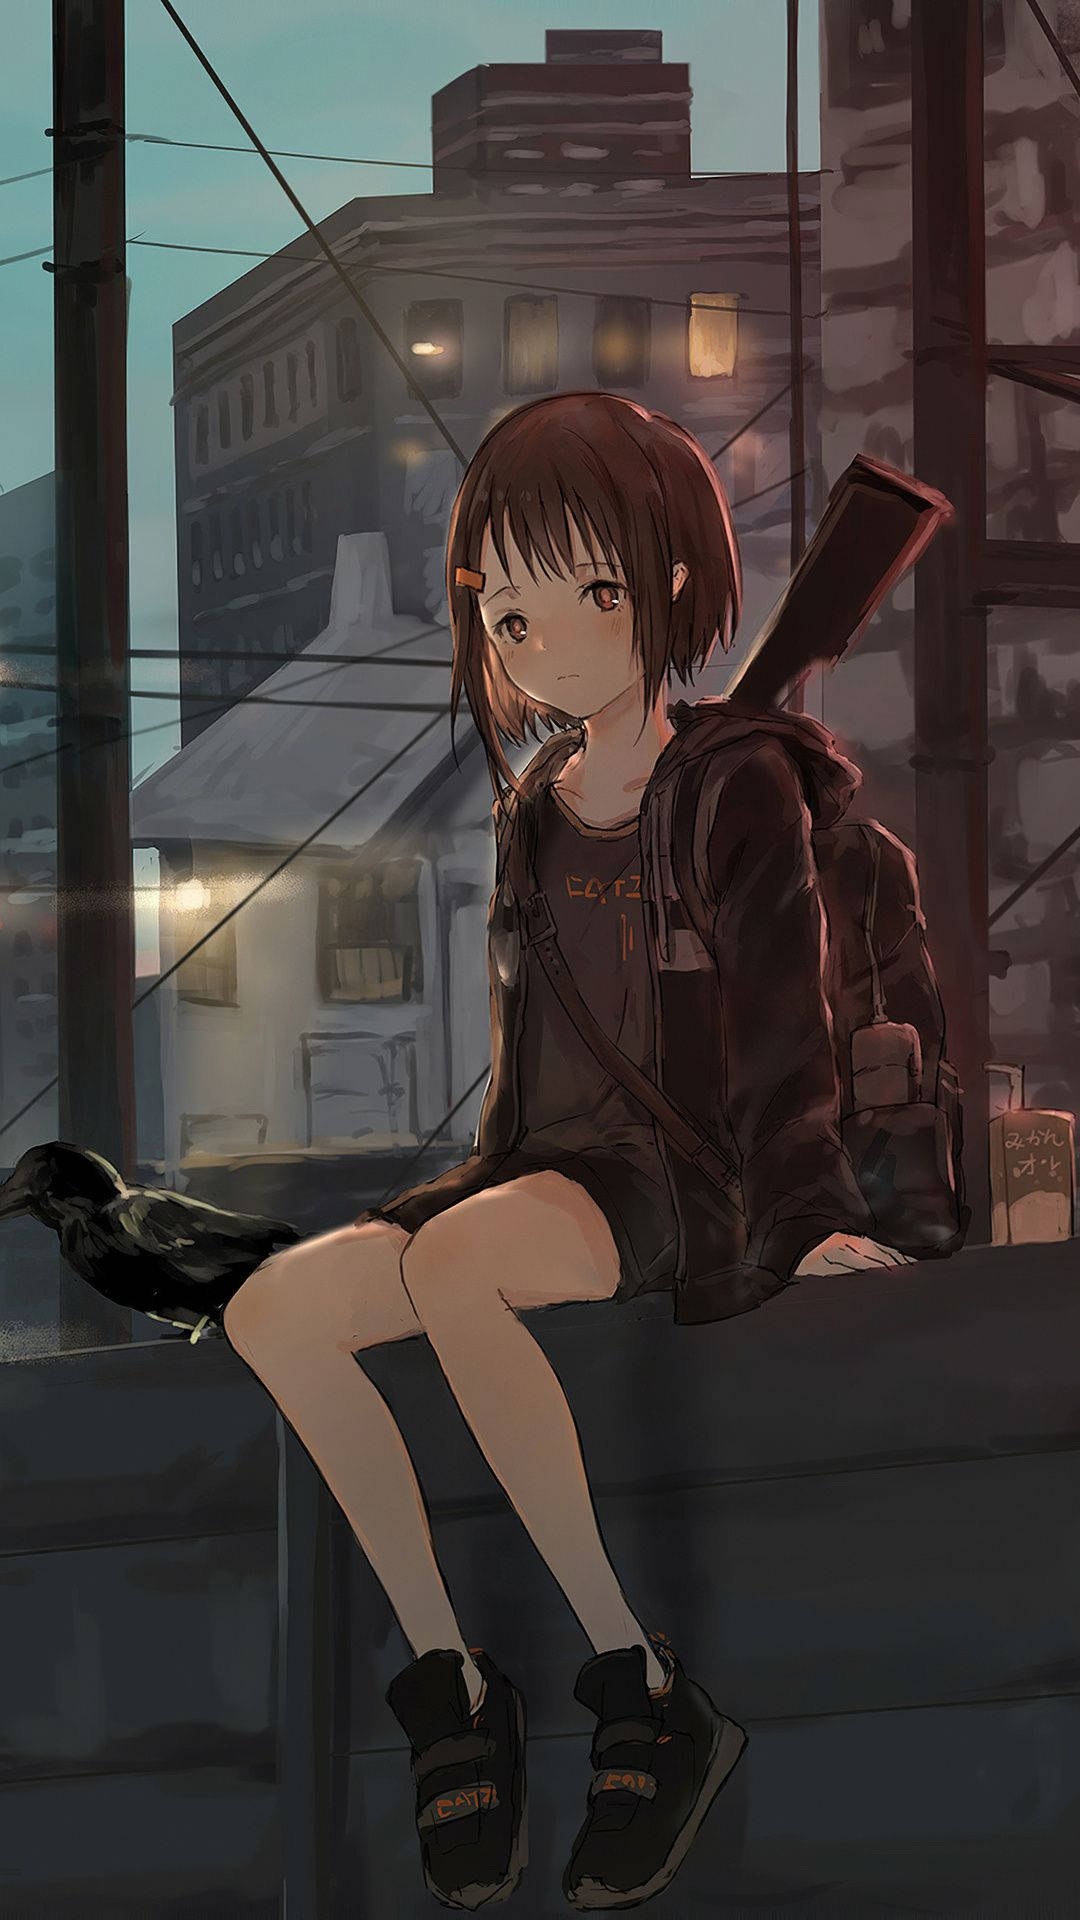 Sad Anime Girl On Ledge Wallpaper